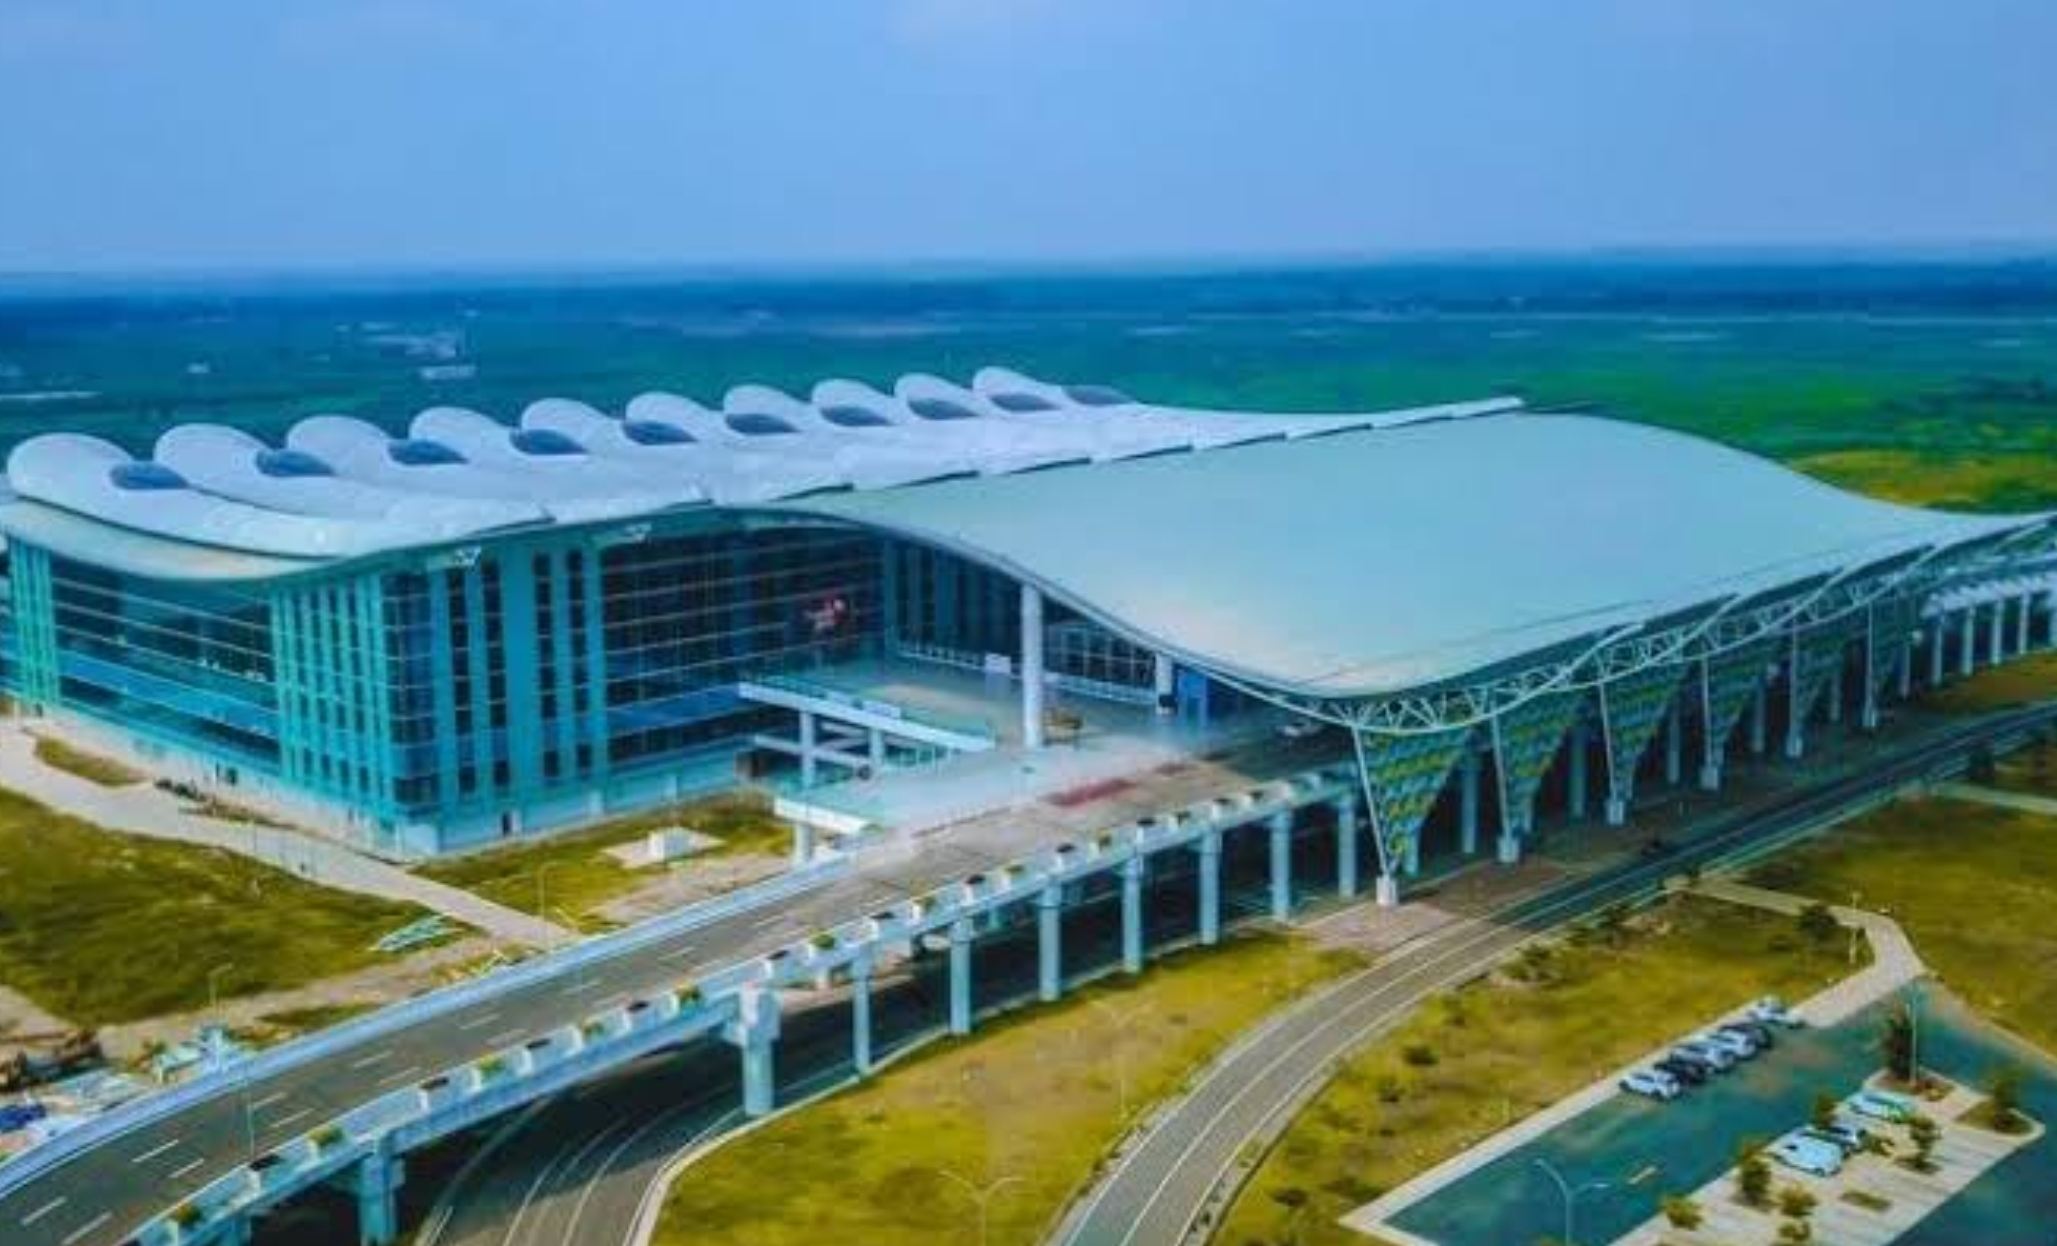 Daftar Maskapai yang akan Buka Rute Penerbangan dari Bandara Kertajati Majalengka, Mulai 15 April